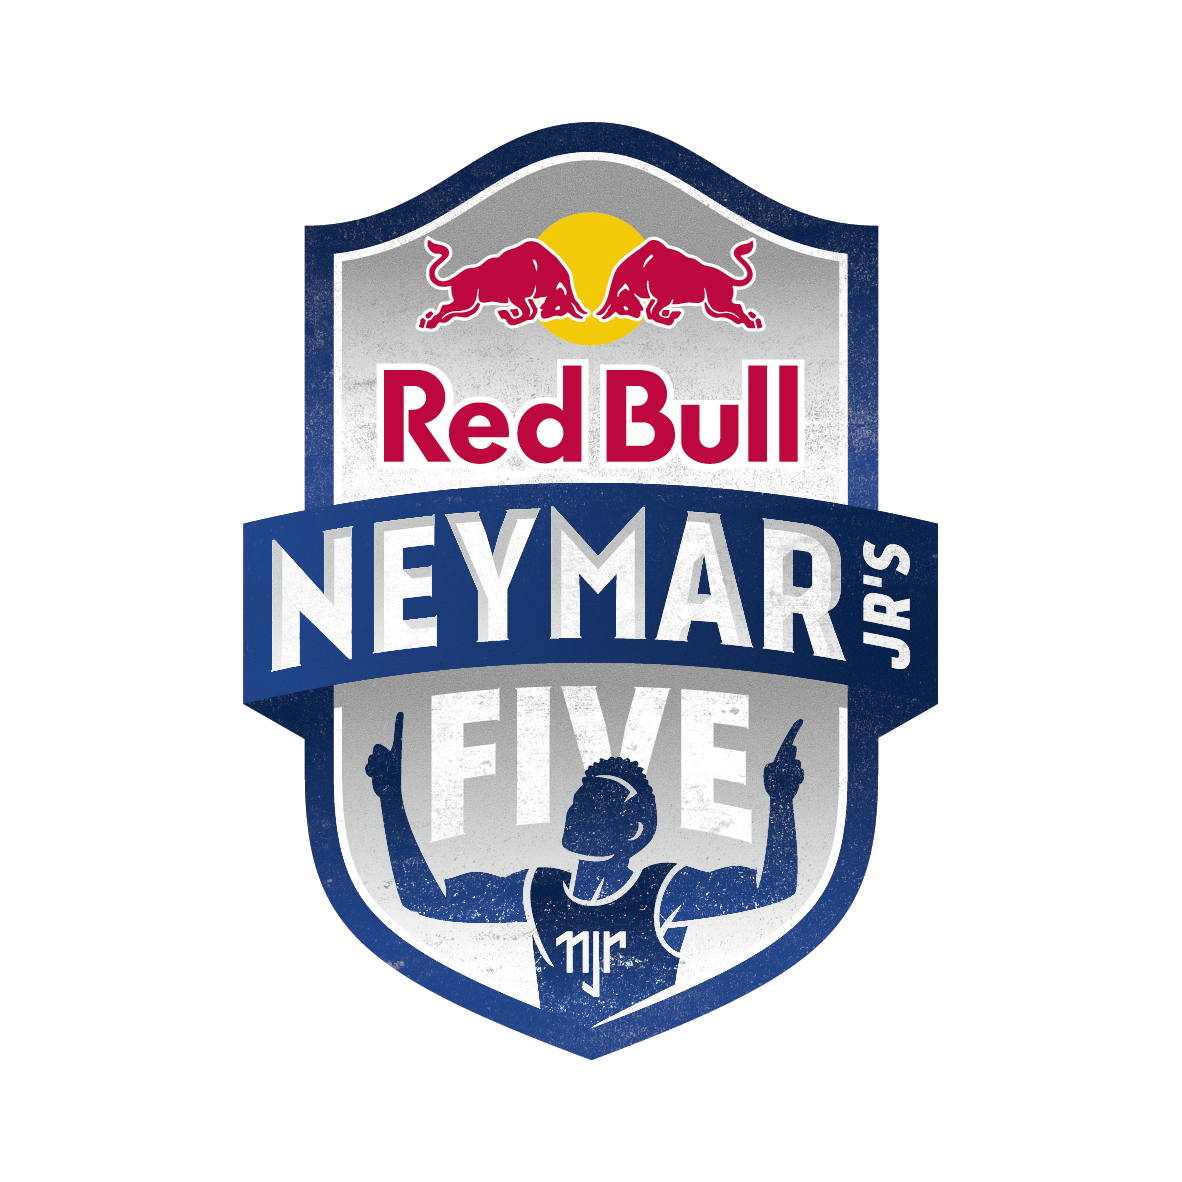 Red Bull Neymar Jr S Five Outplay Them All